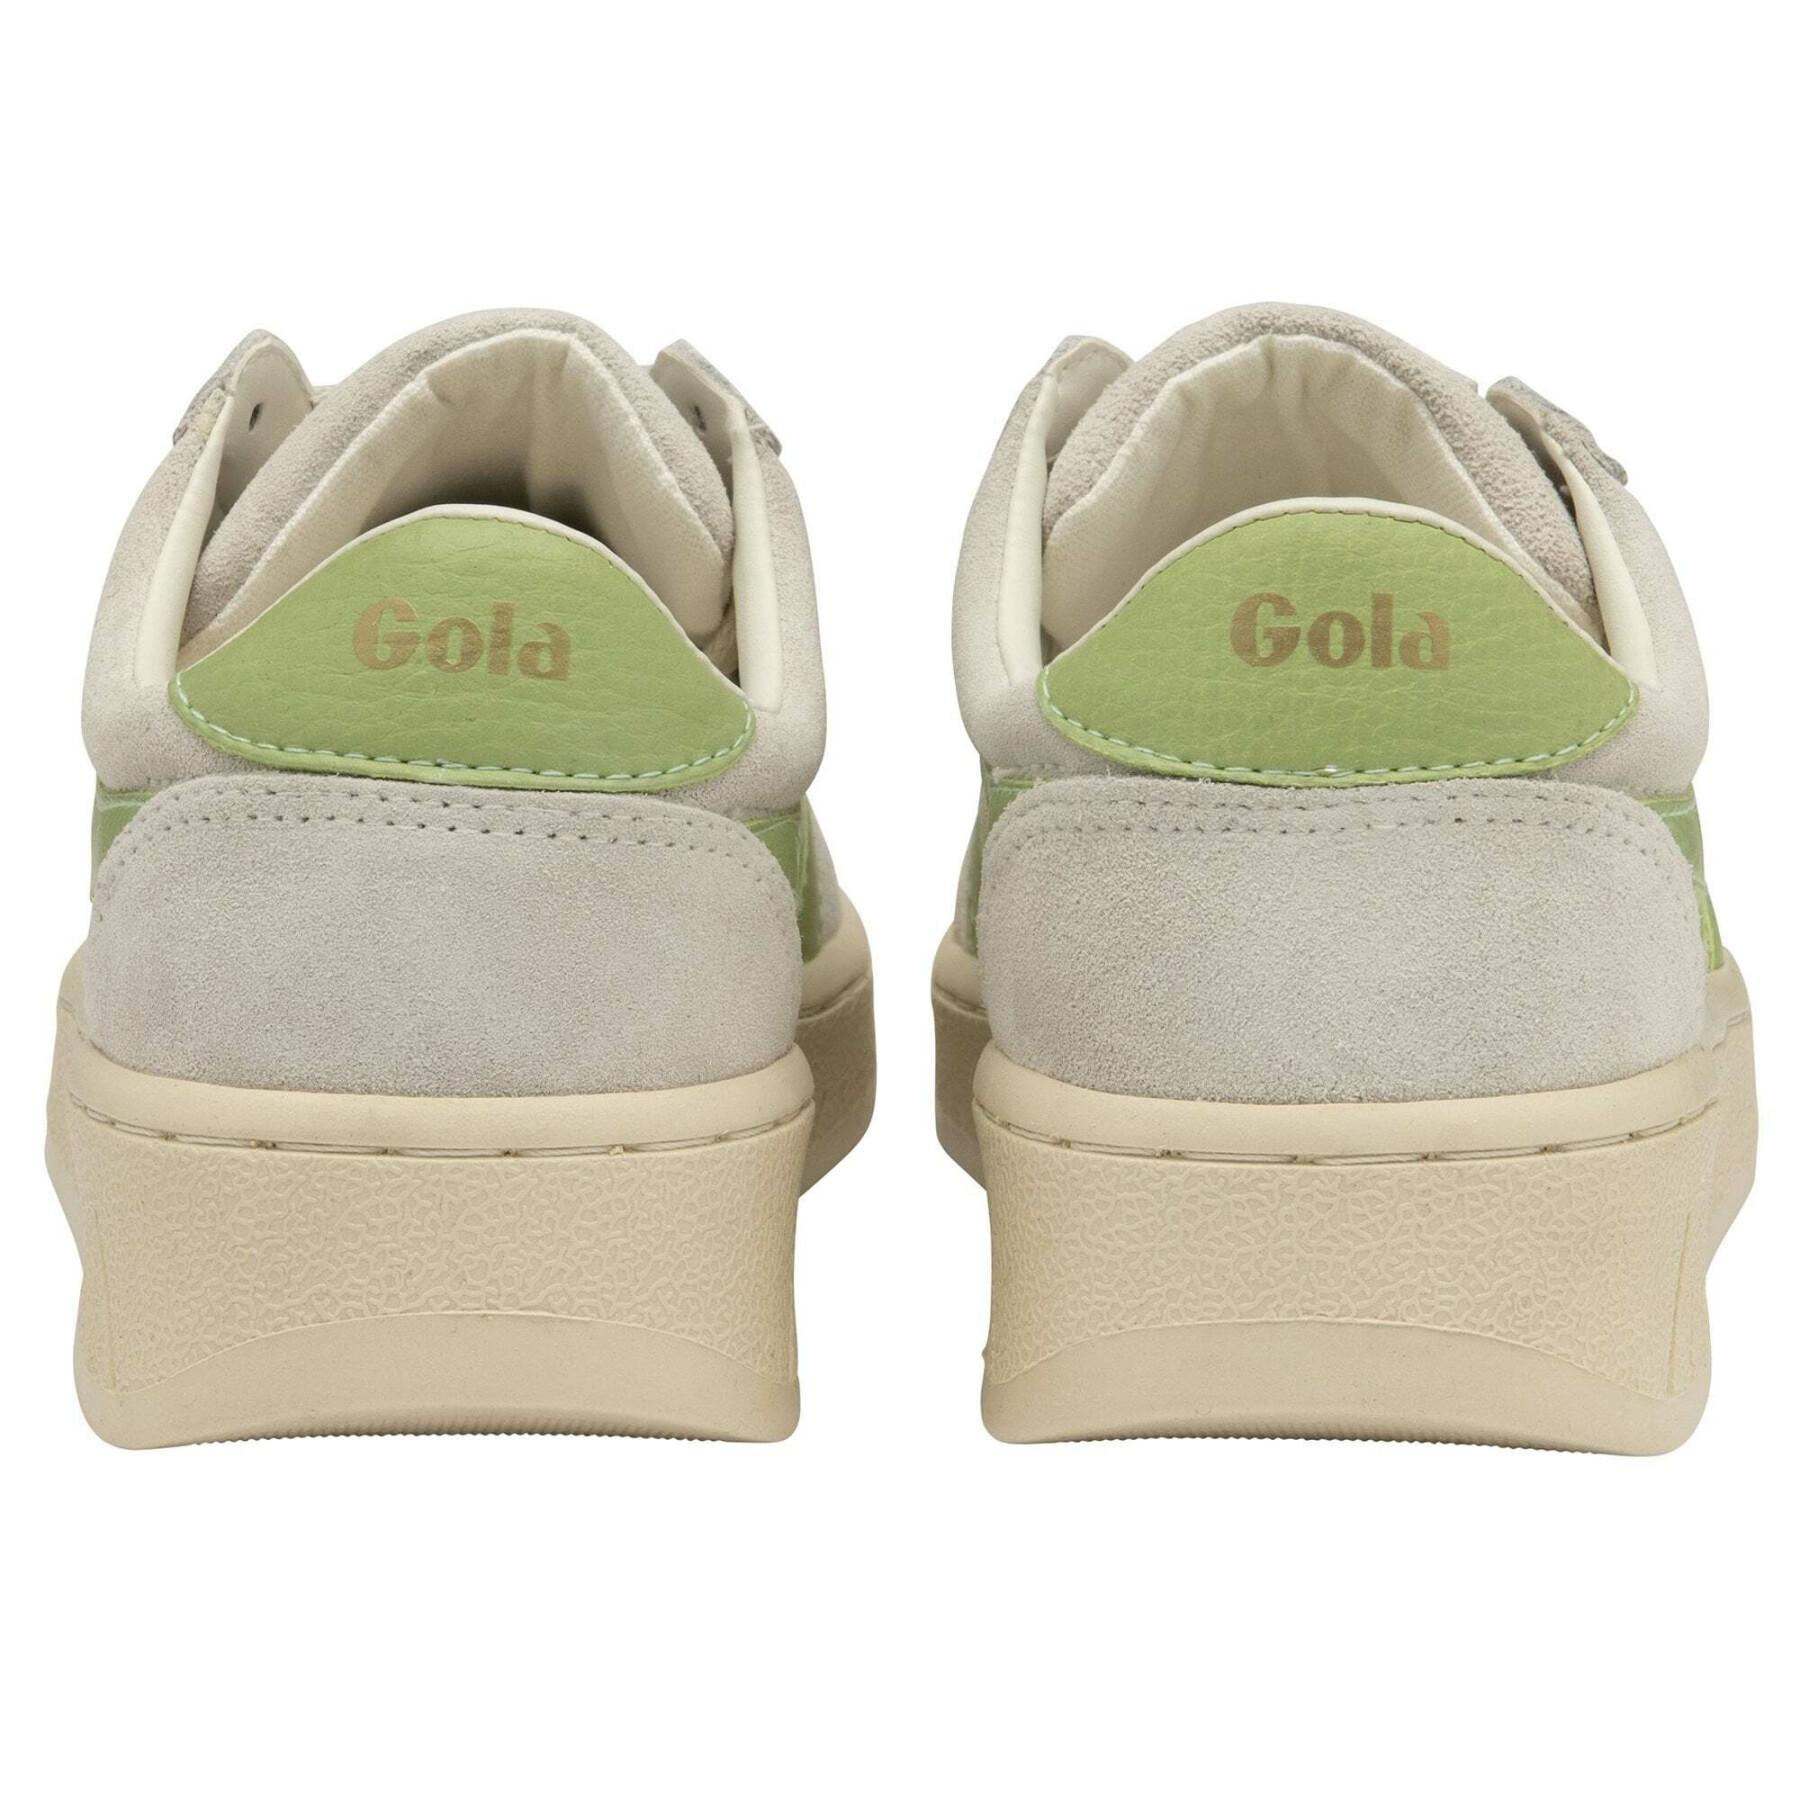 Women's suede sneakers Gola Grandslam